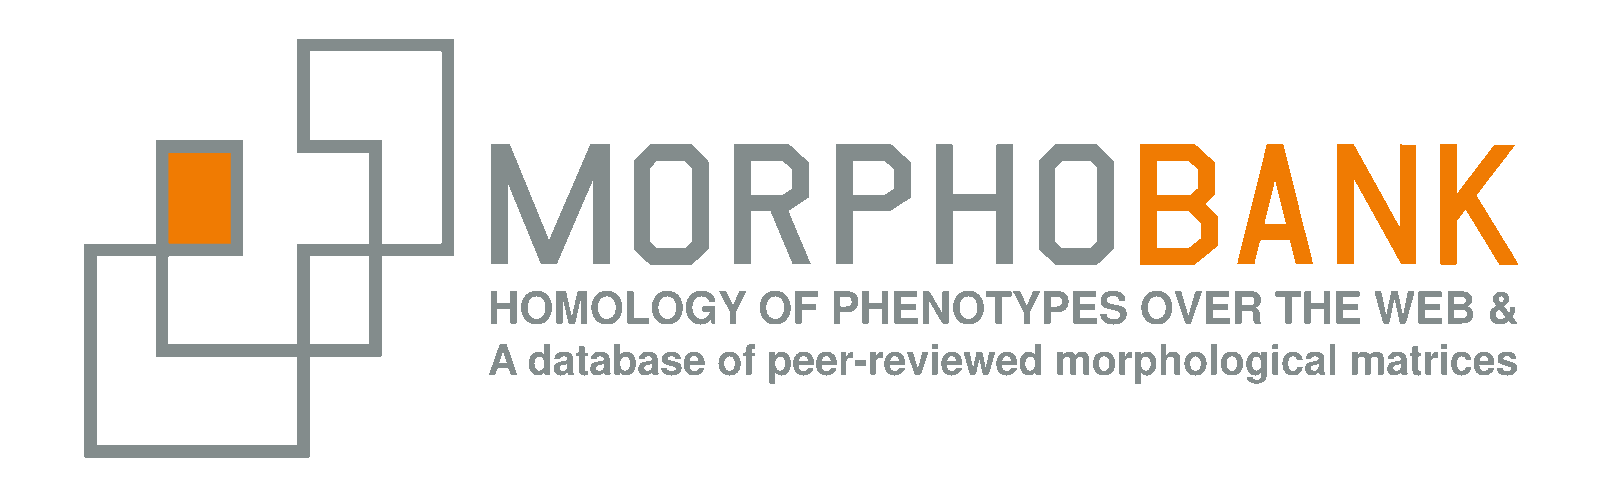 MorphoBank logo